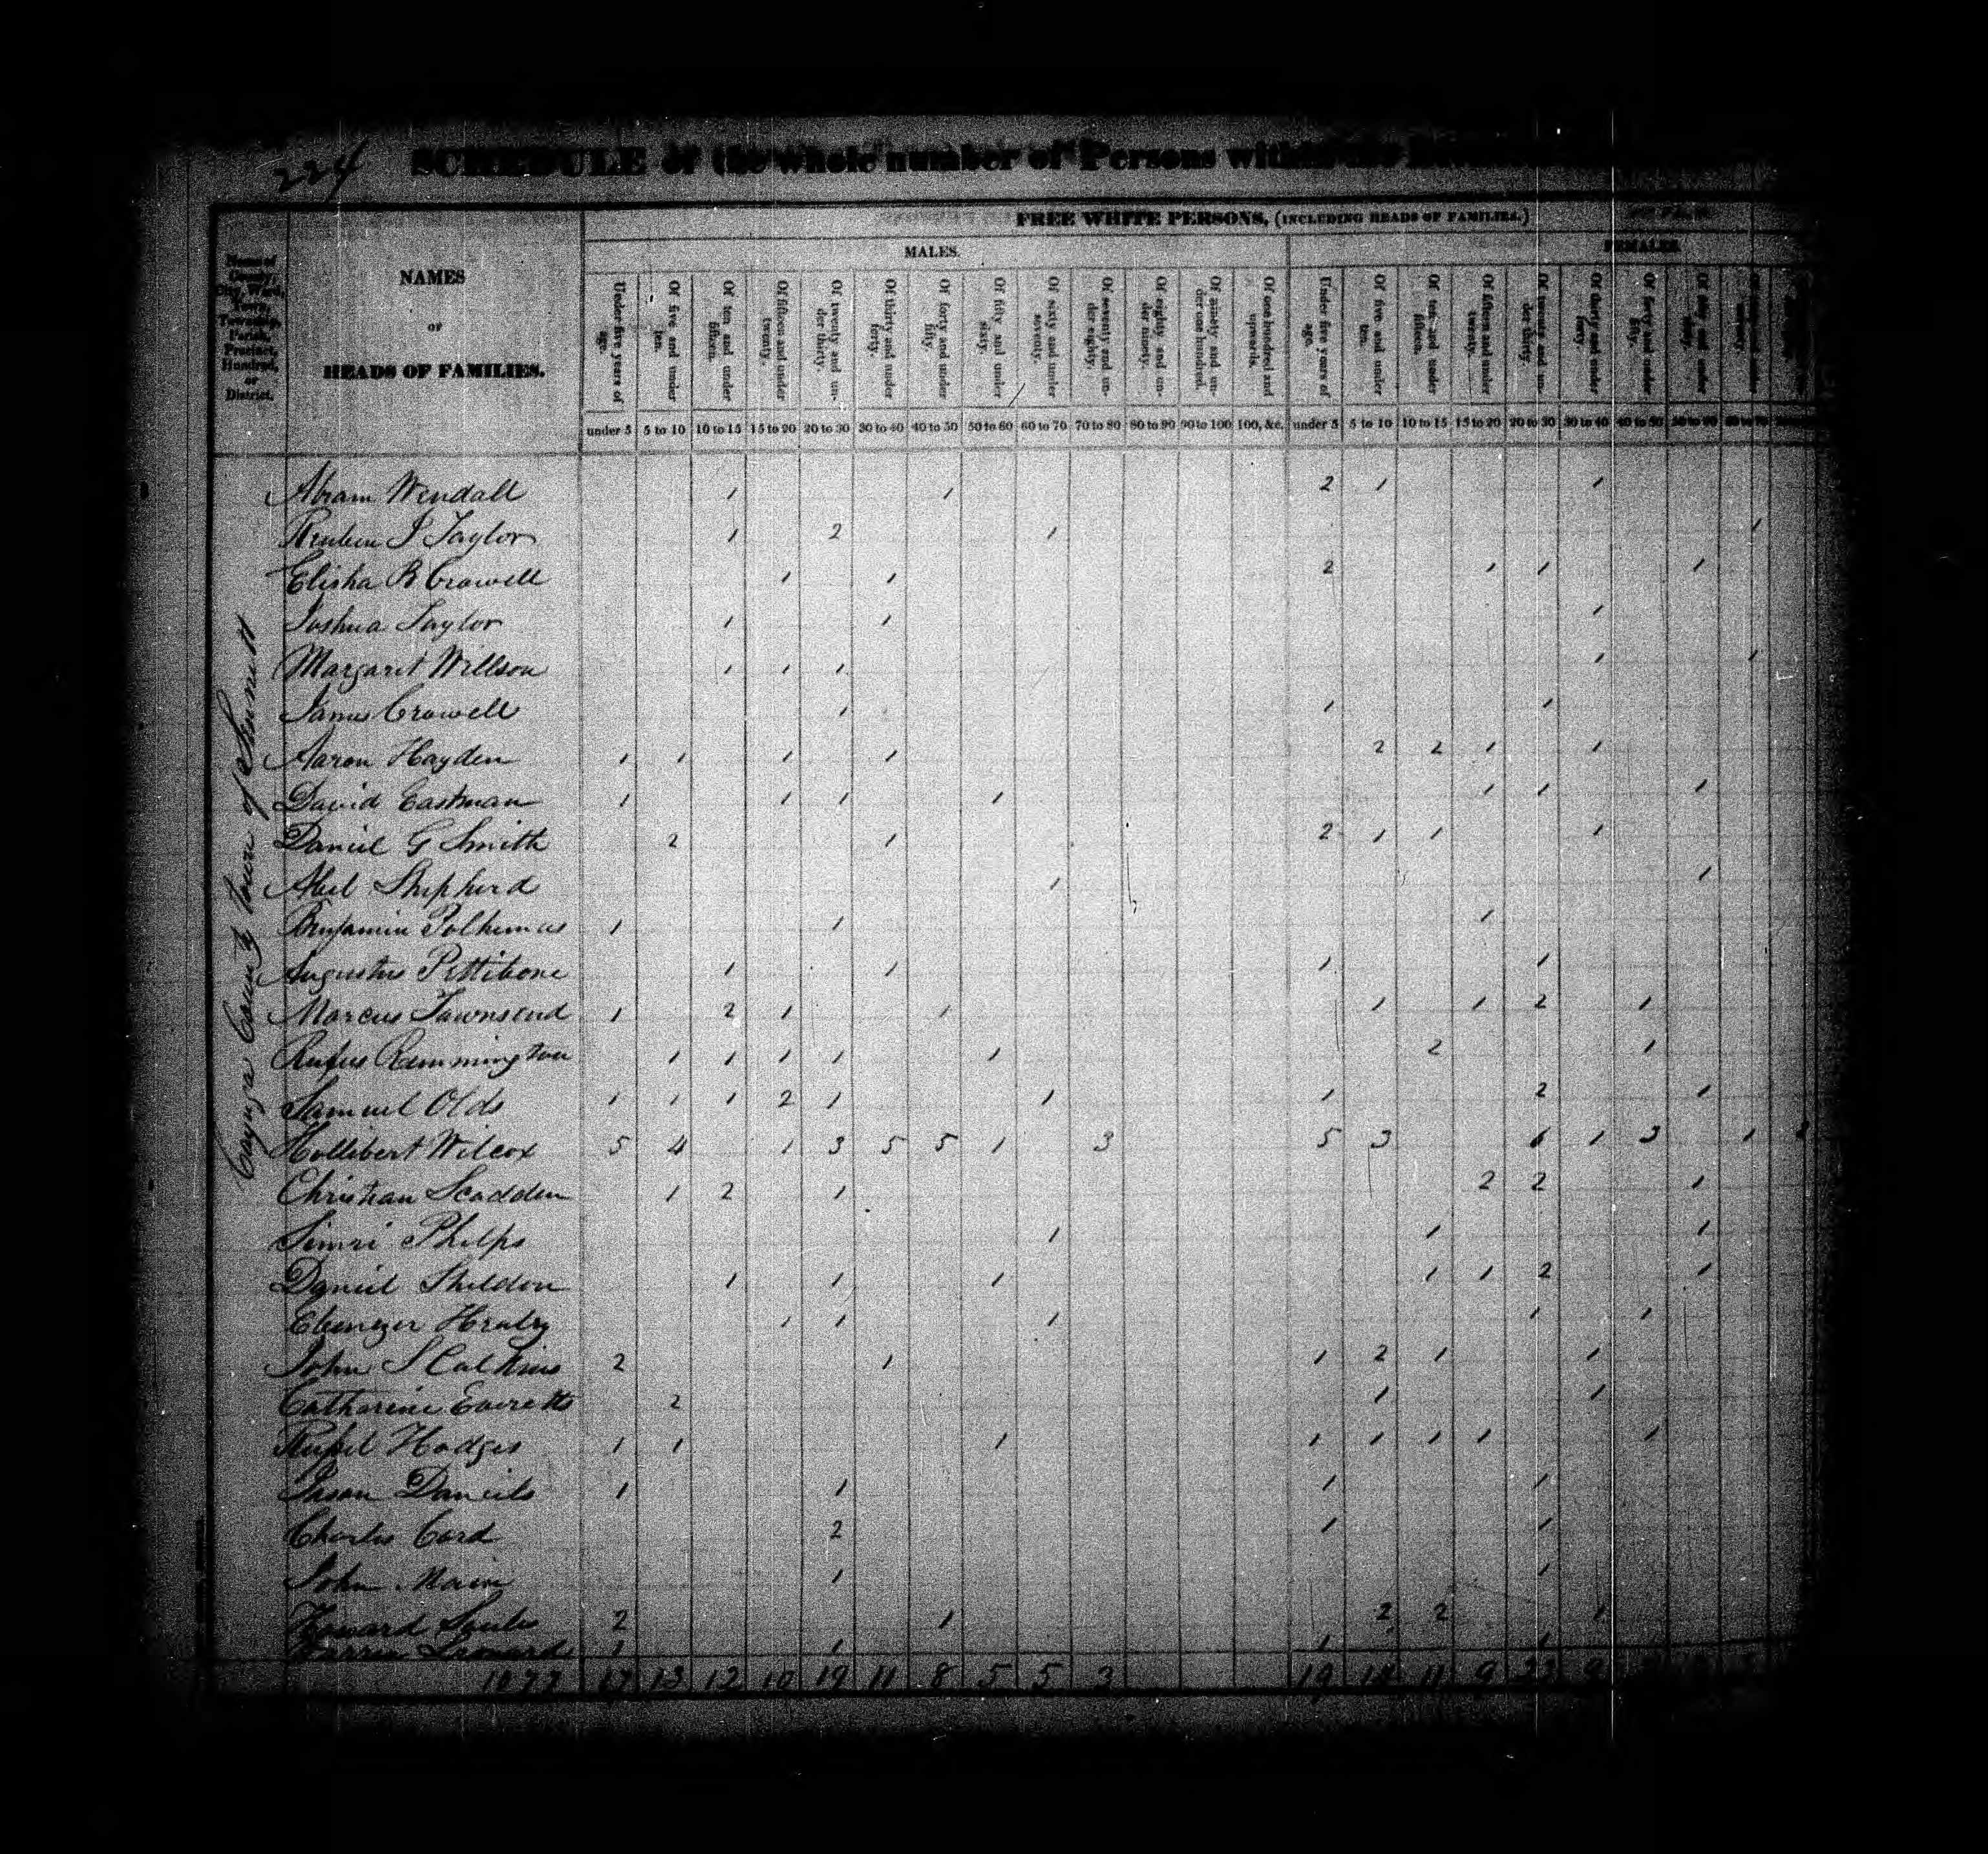 1830 United States Federal Census - Simri Phelps